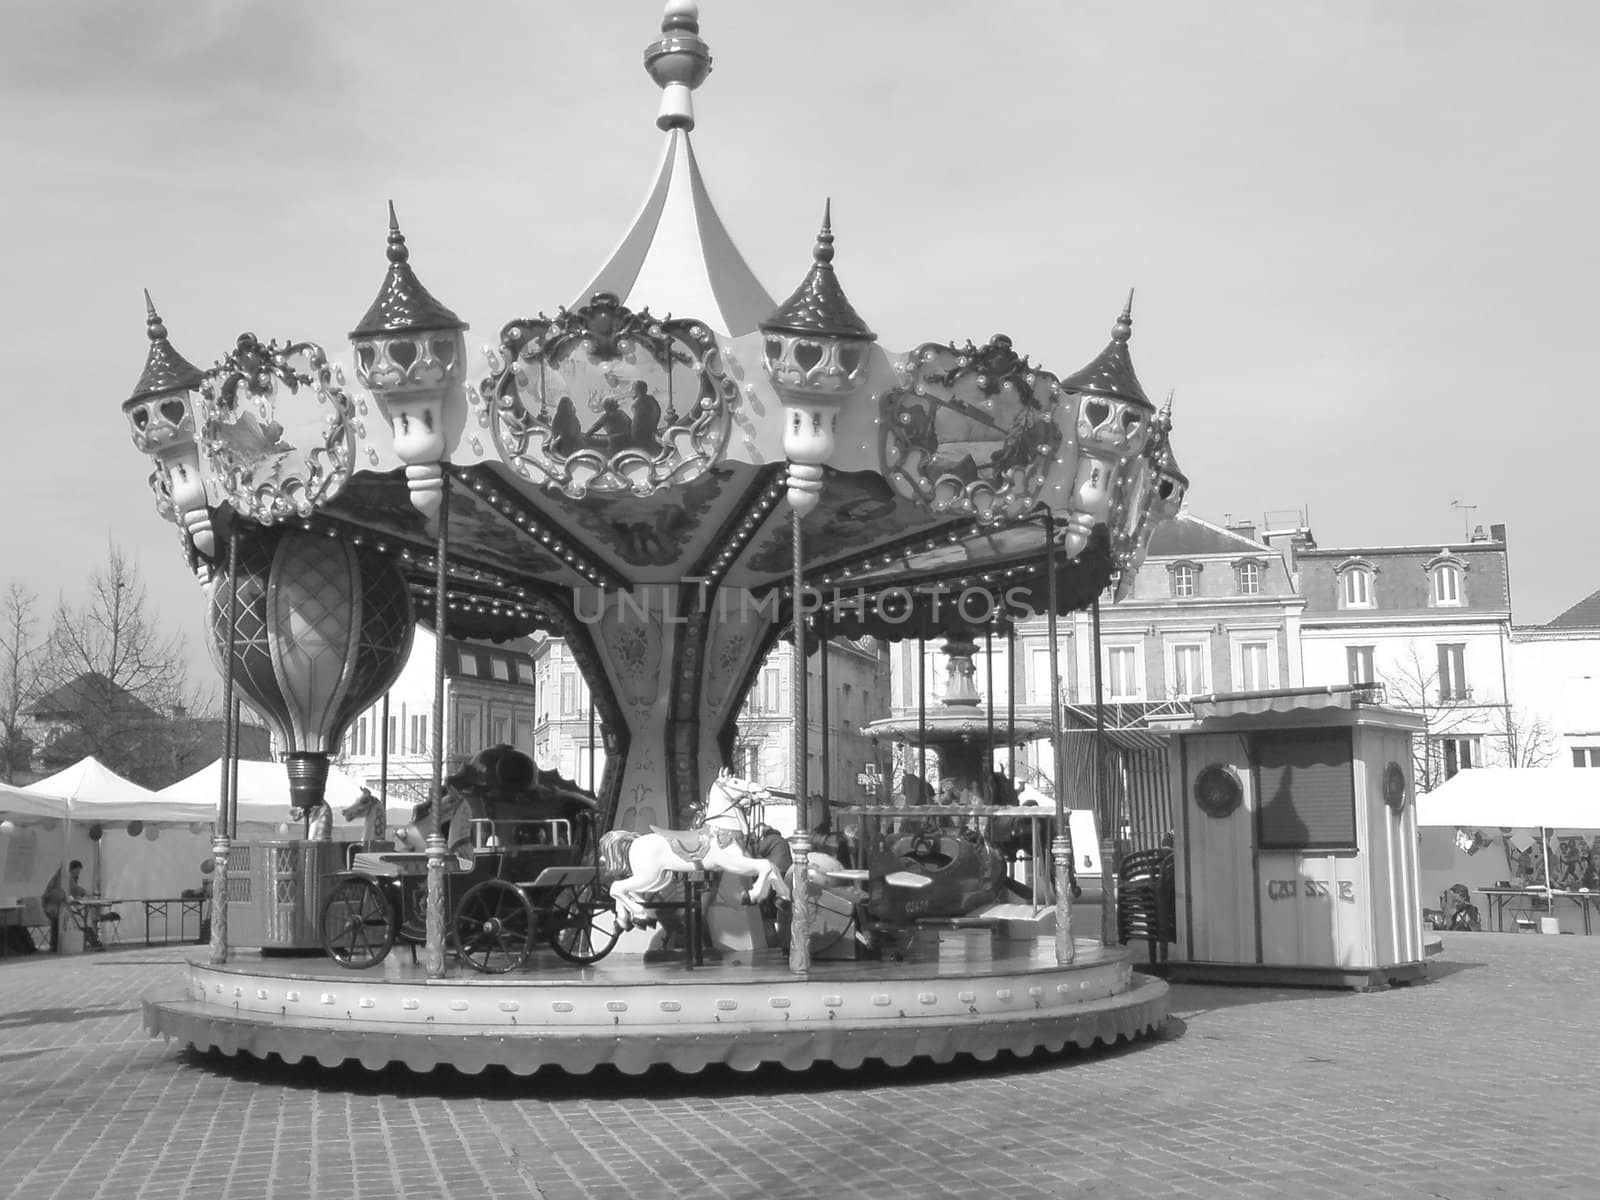 Merry-go-round (carousel)